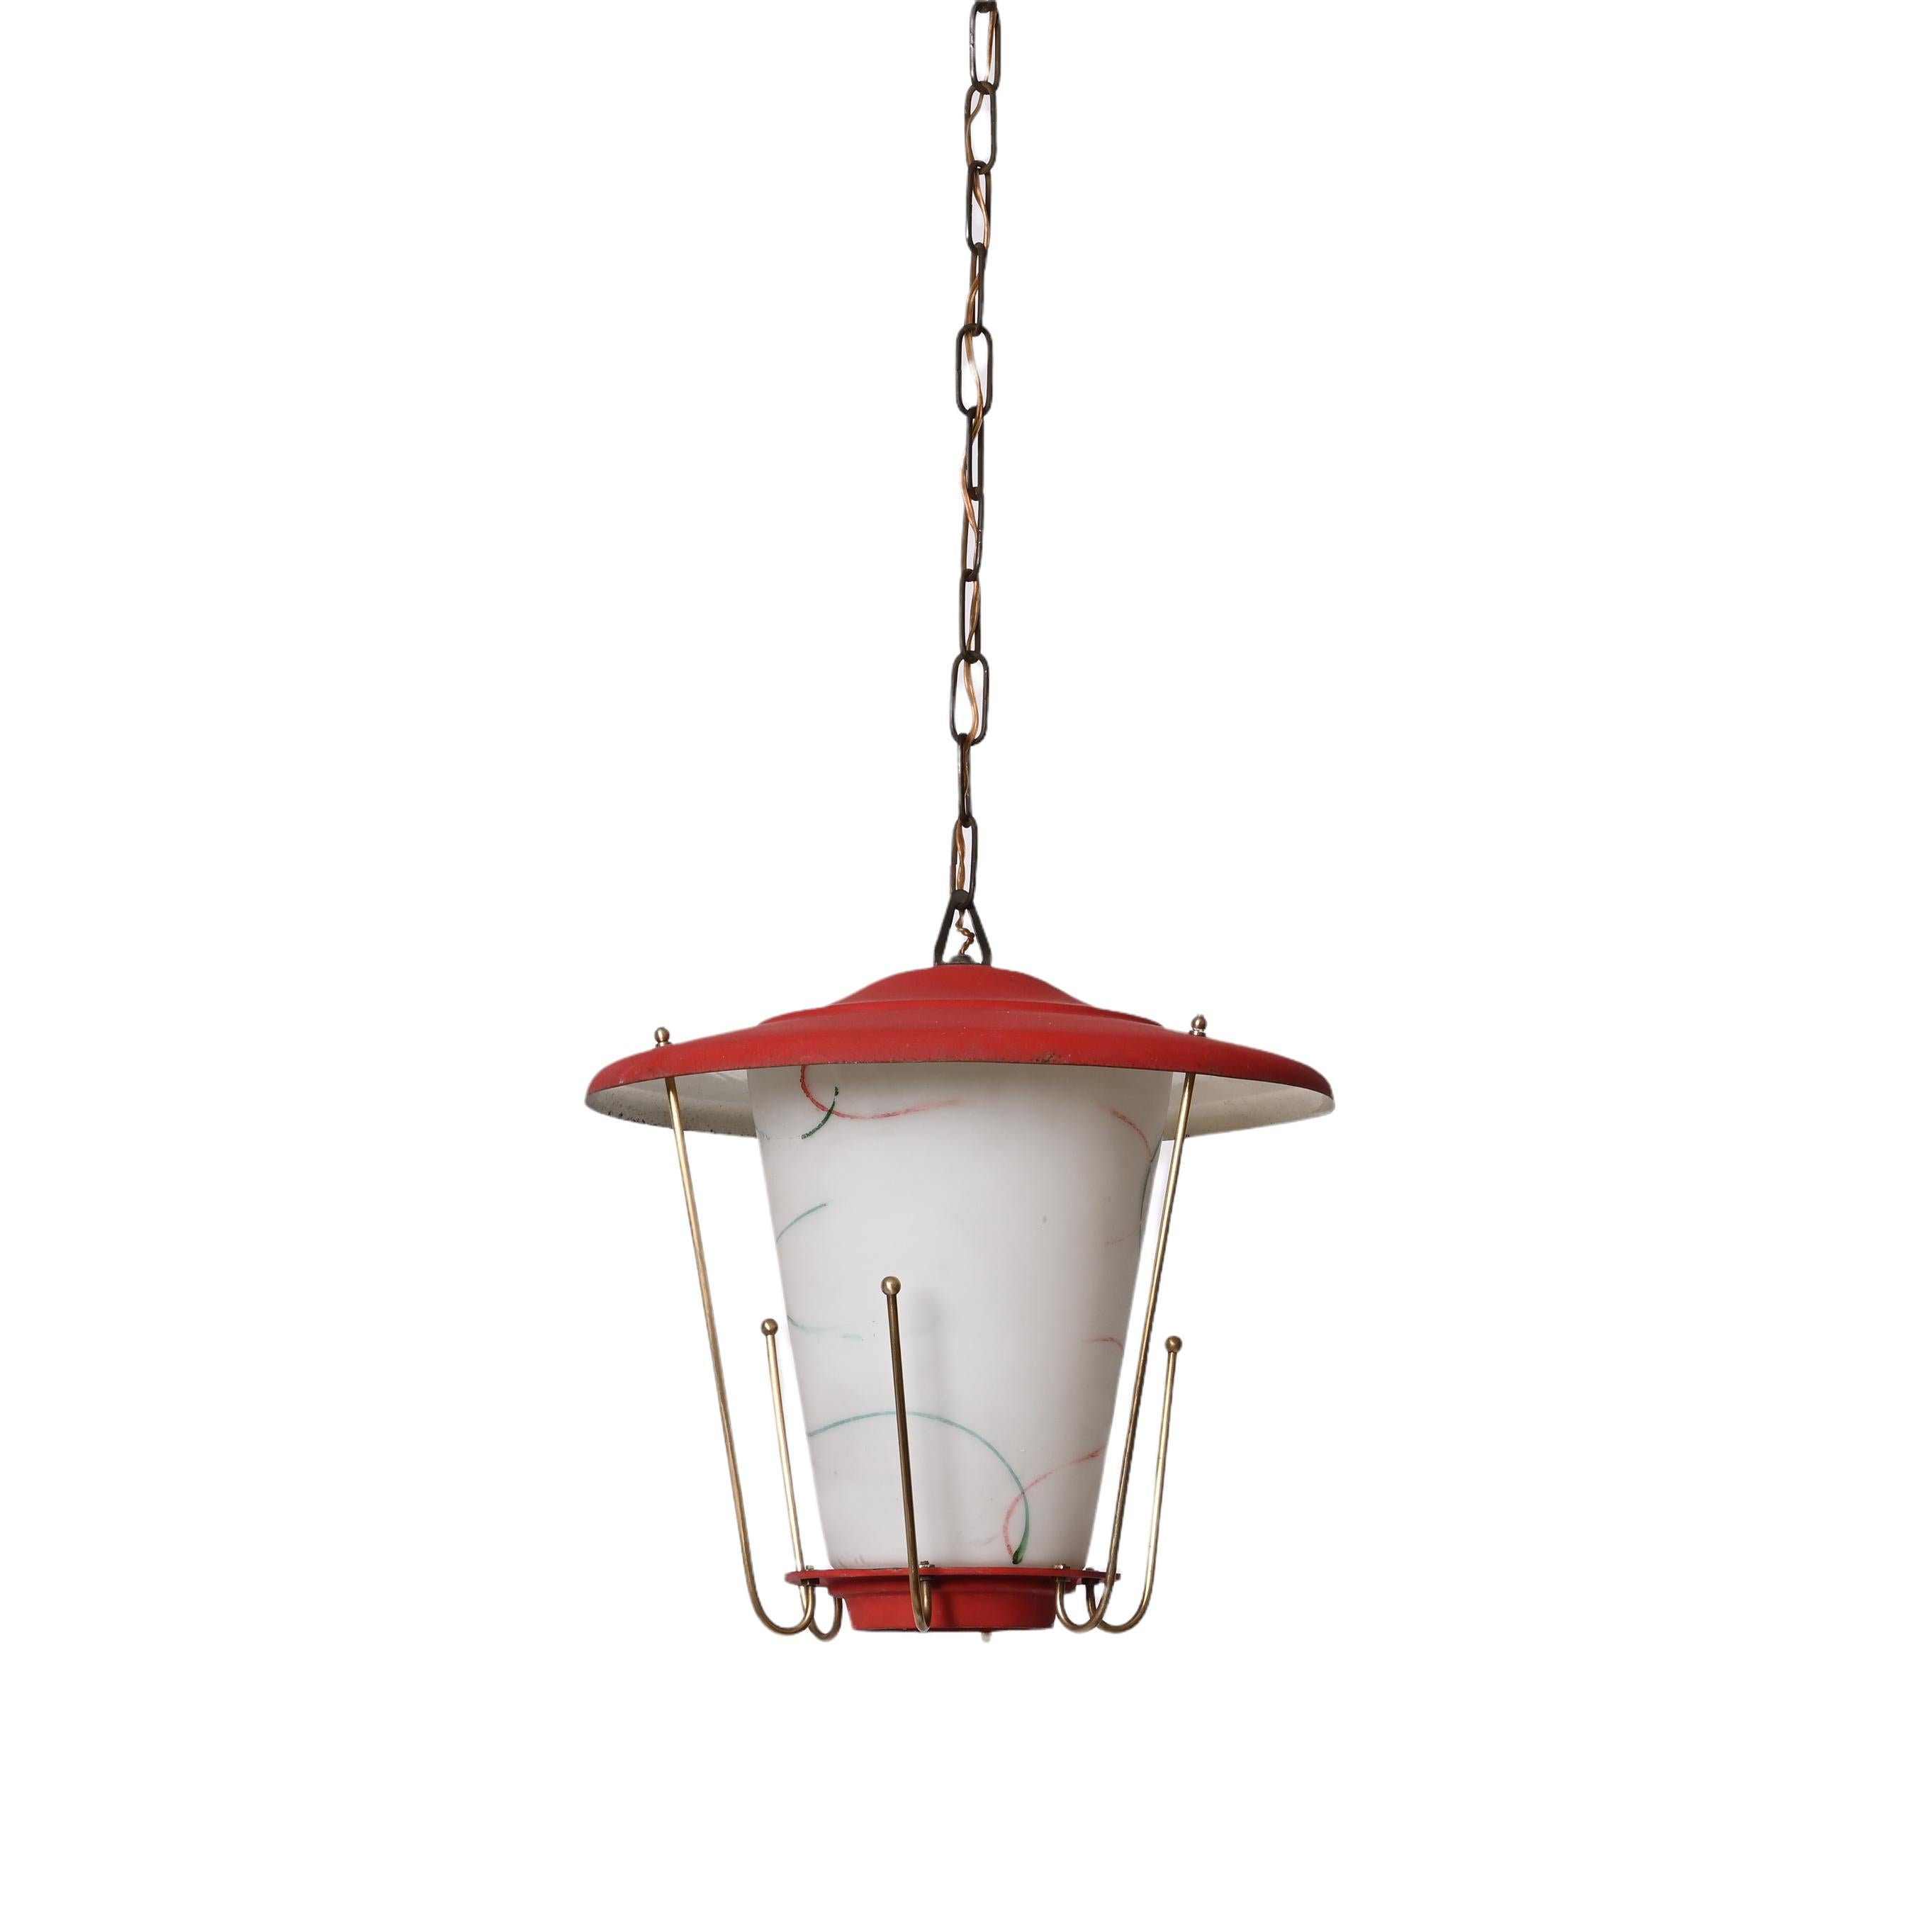 Midcentury Round Opaline Glass and Brass Italian Red Lantern Chandelier, 1950s For Sale 9